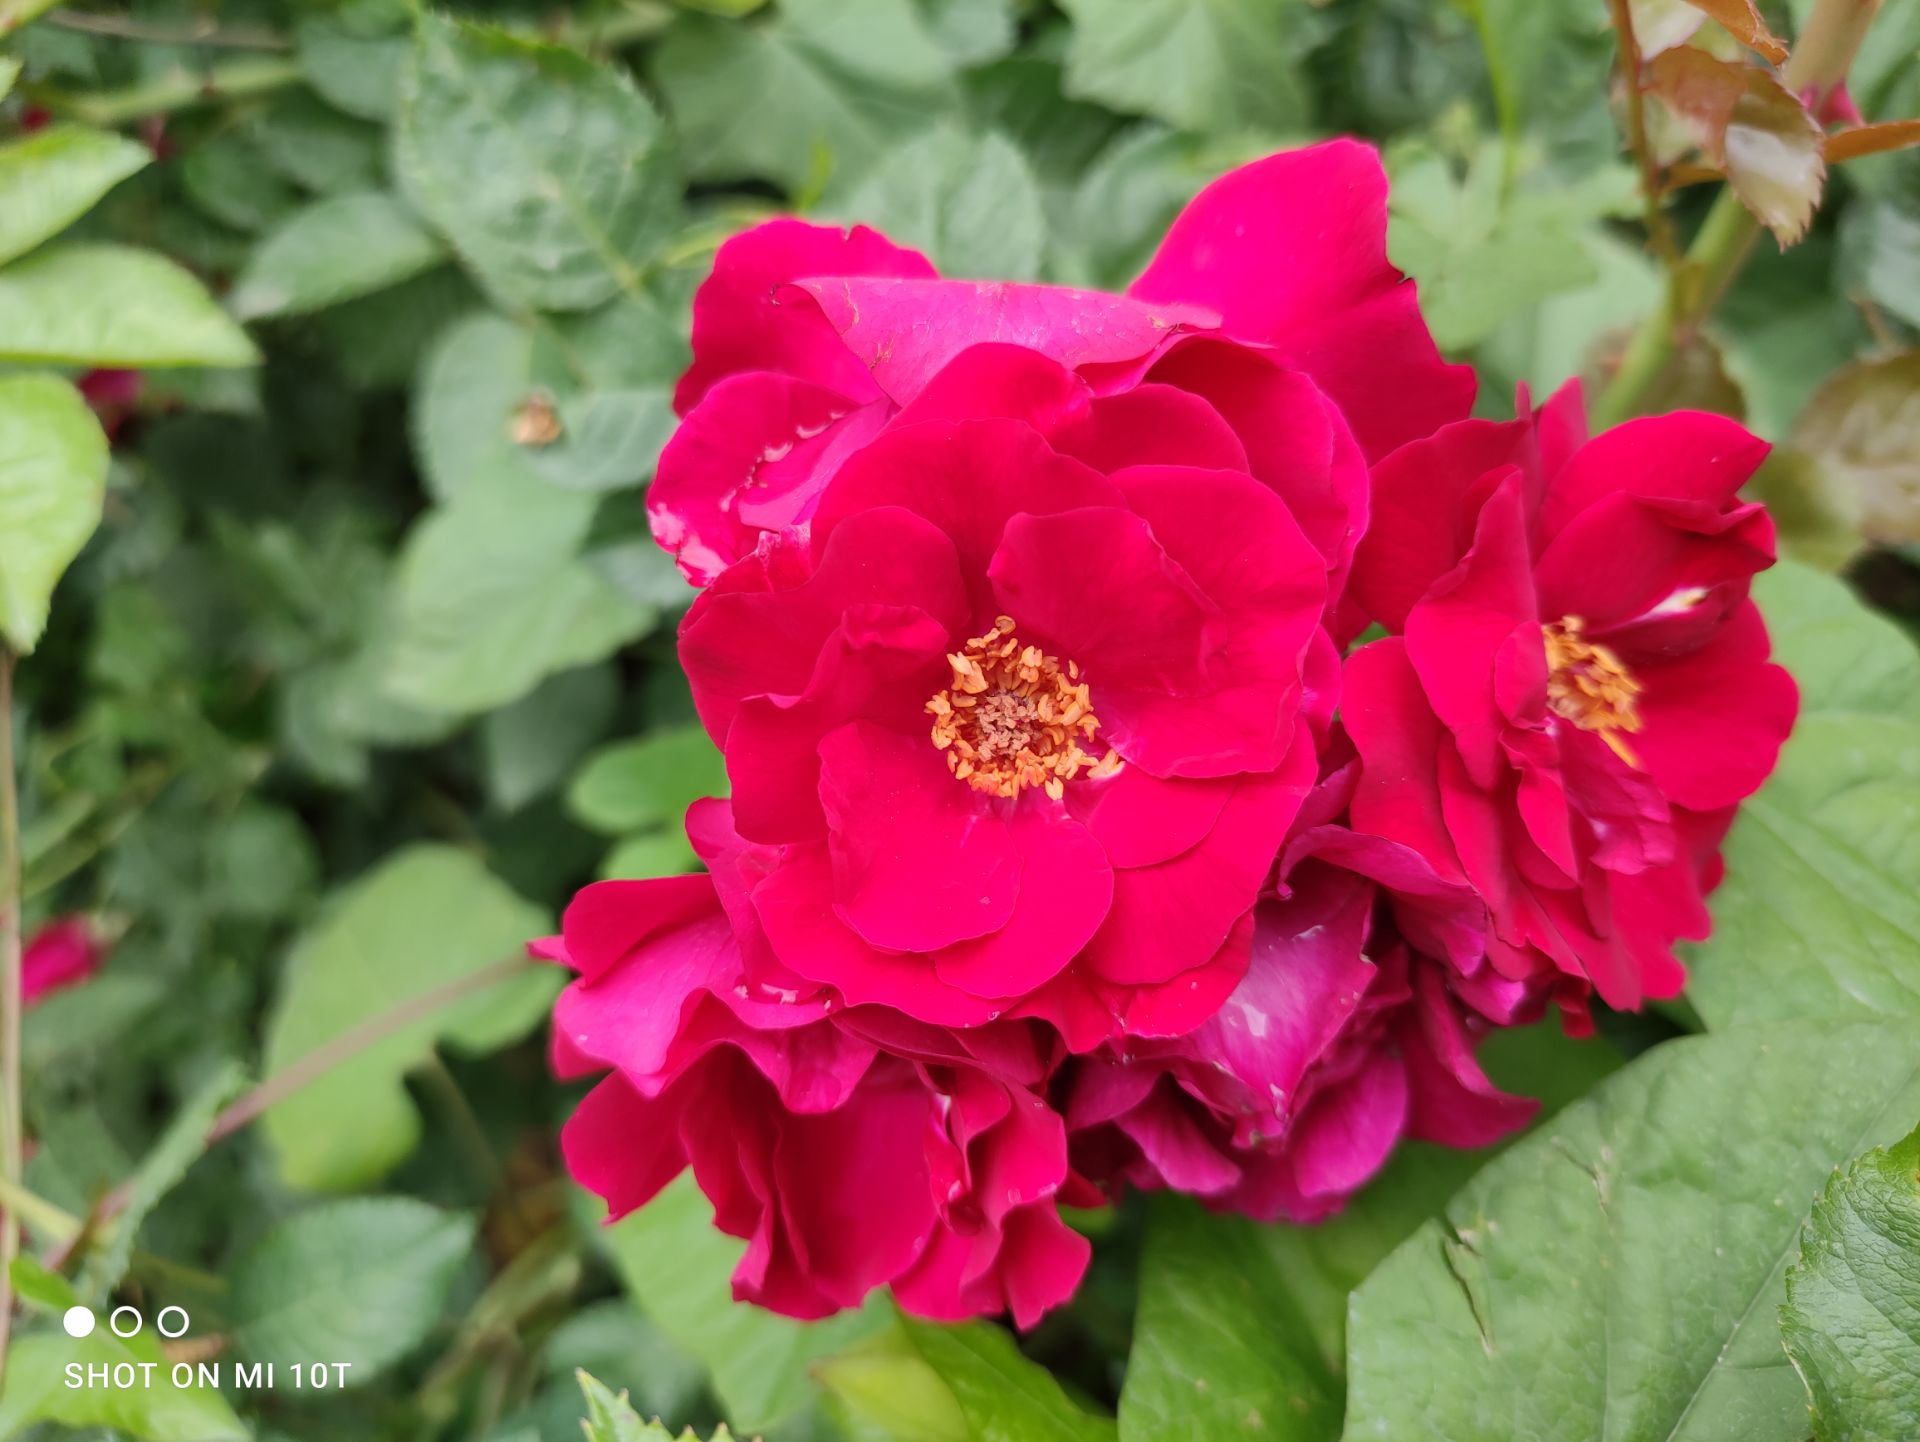 نمونه عکس دوربین مایکرو شیائومی می 10 تی - گل و گیاه